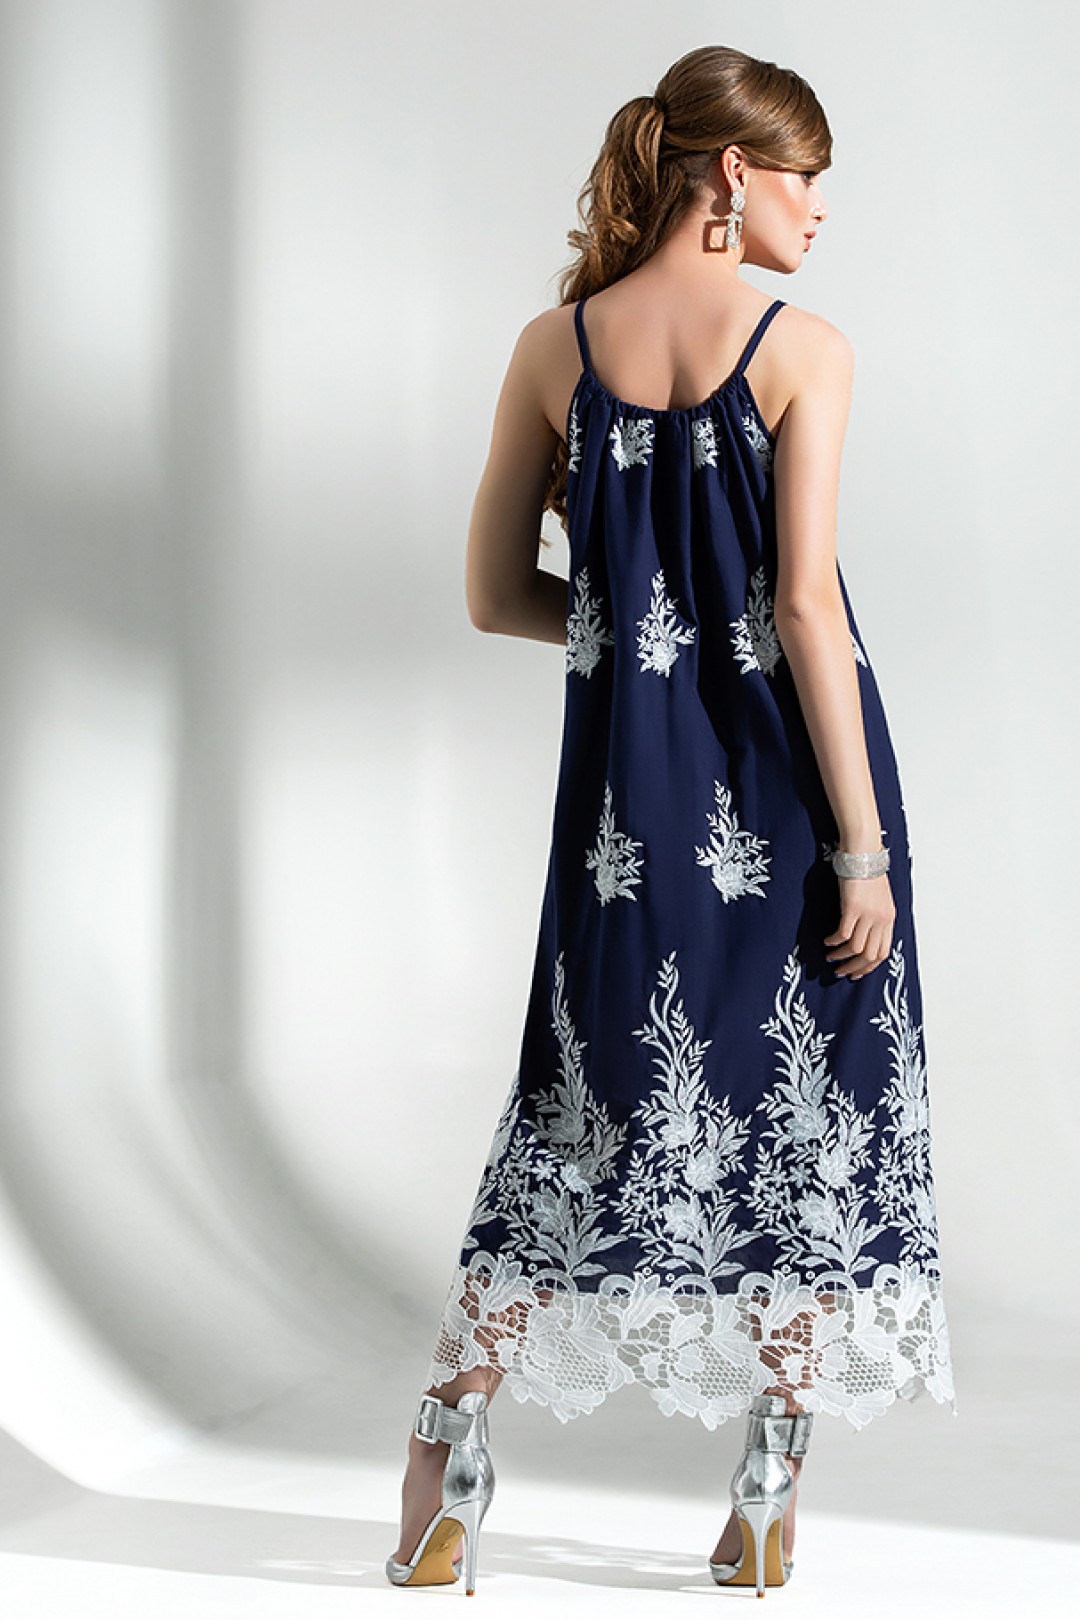 Платье Дива 1289 синий-белый